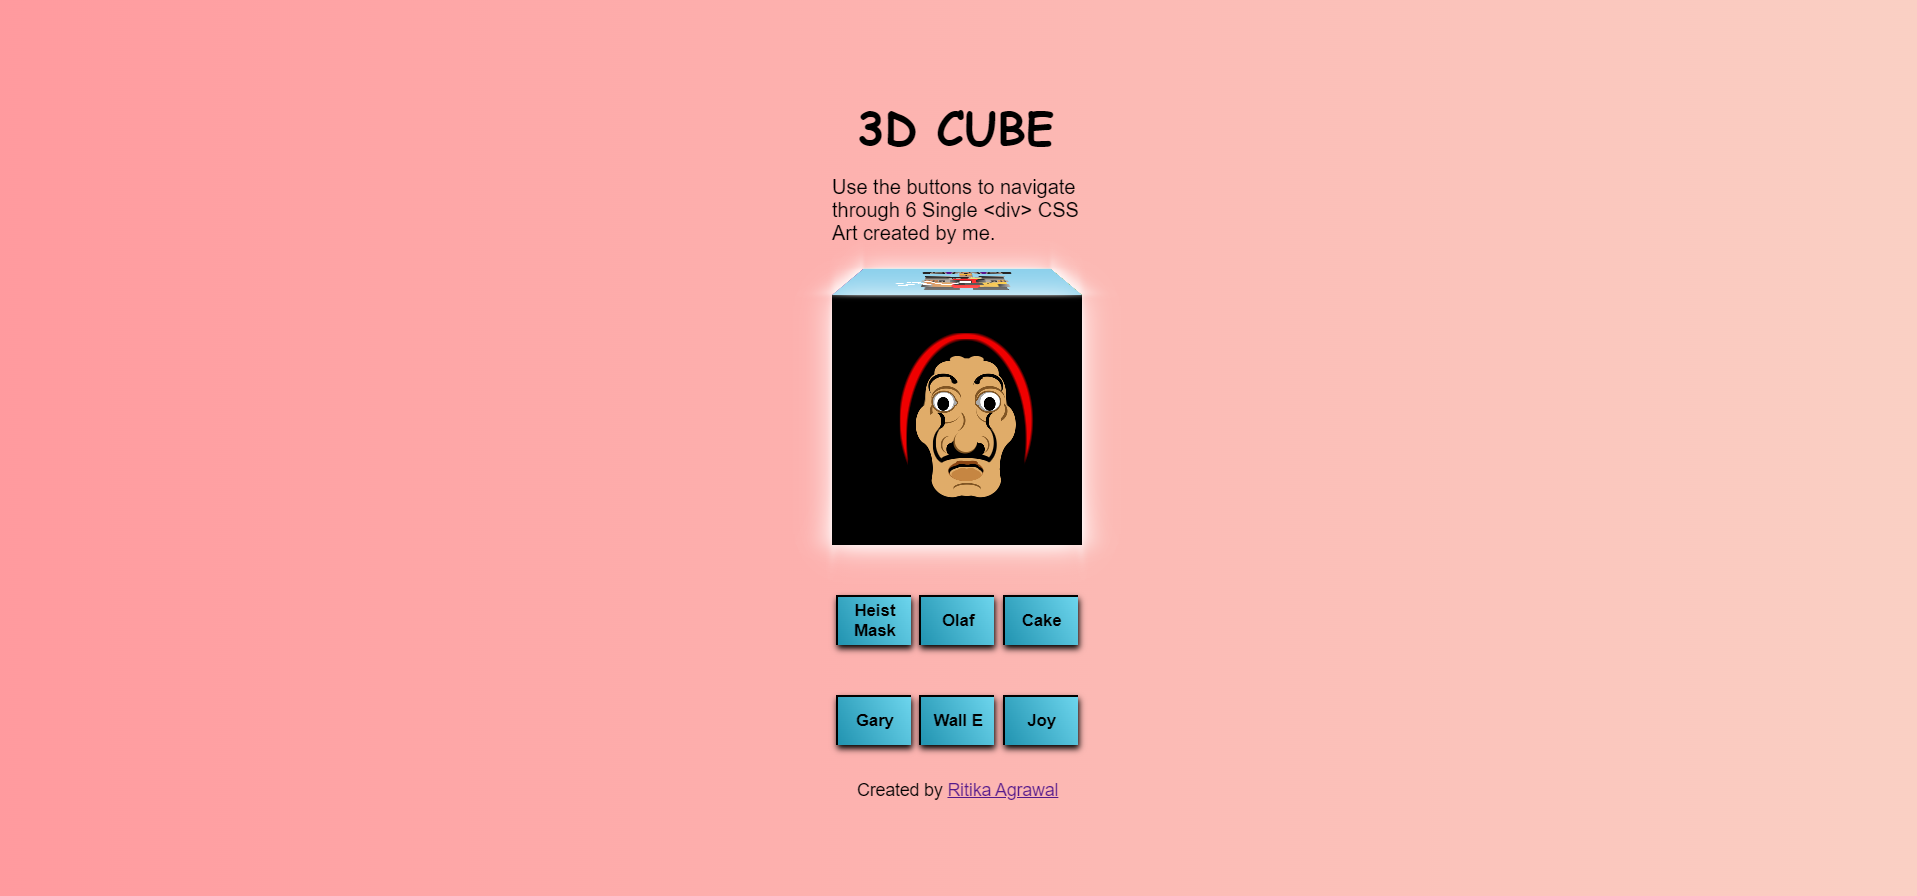 a 3d cube with a single div css art on each face